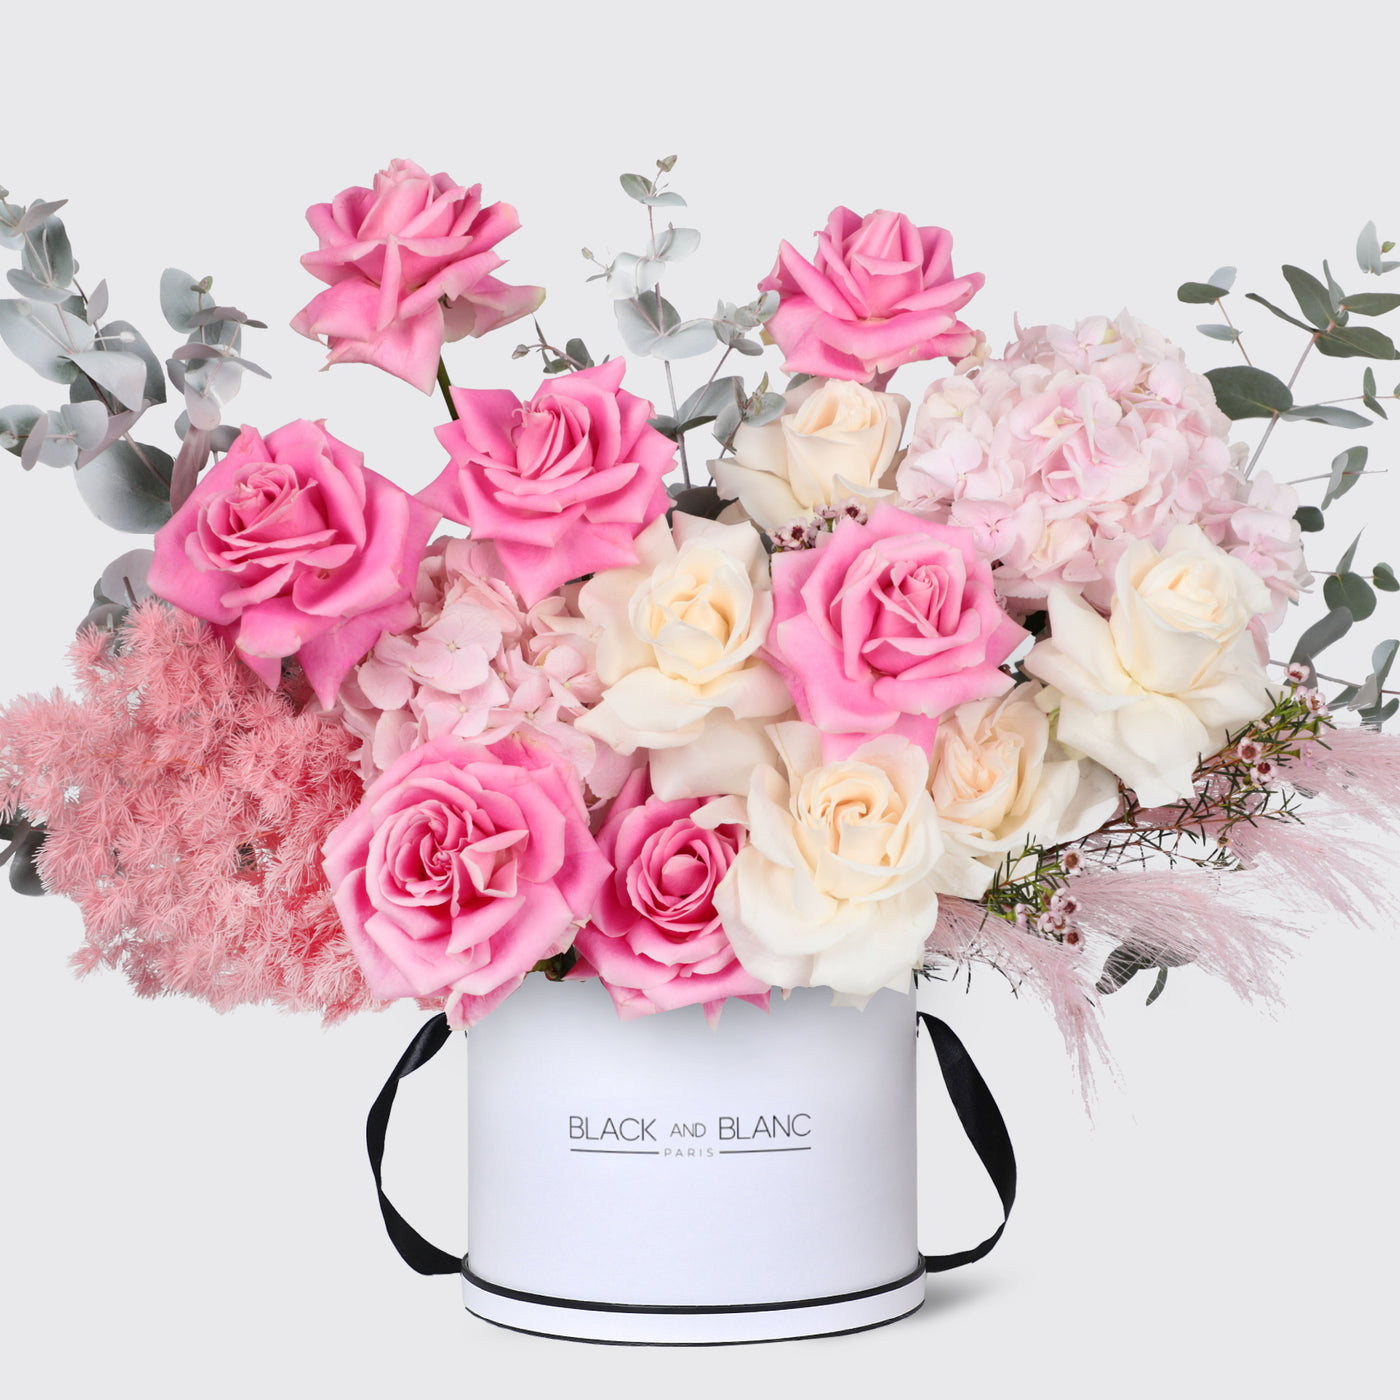 Blissful Harmony in Box - Fresh Flowers